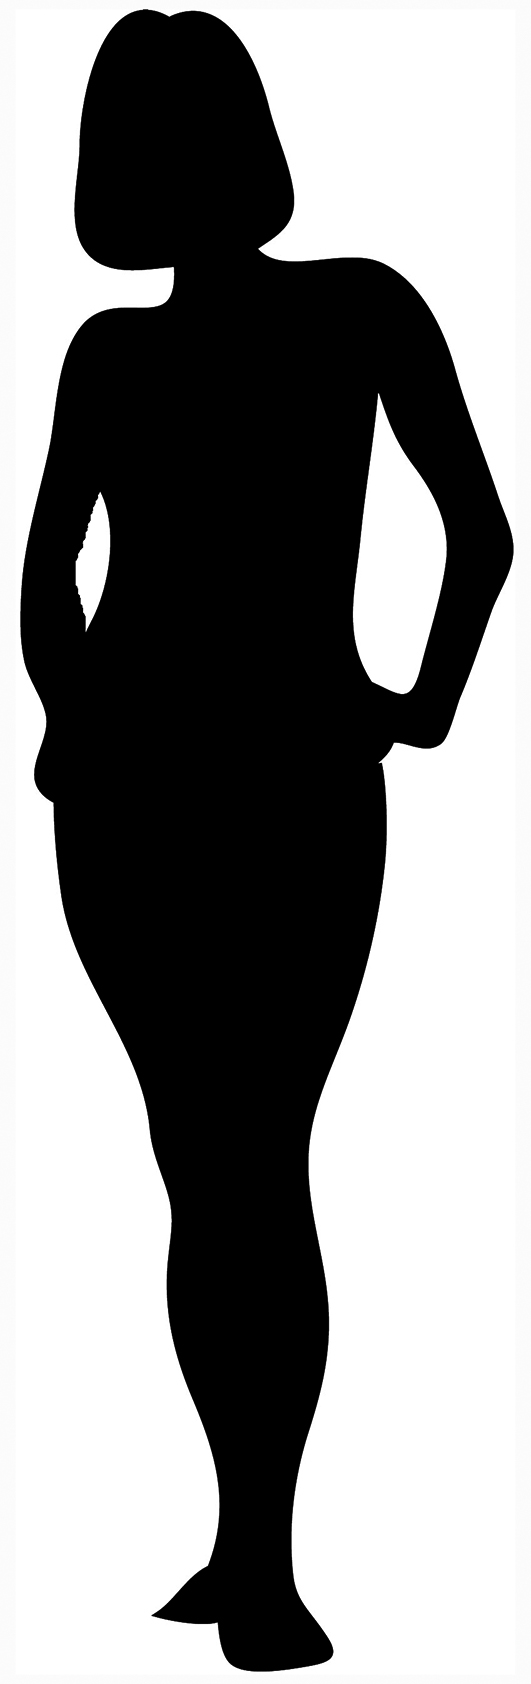 Woman Silhouette Clip Art u20